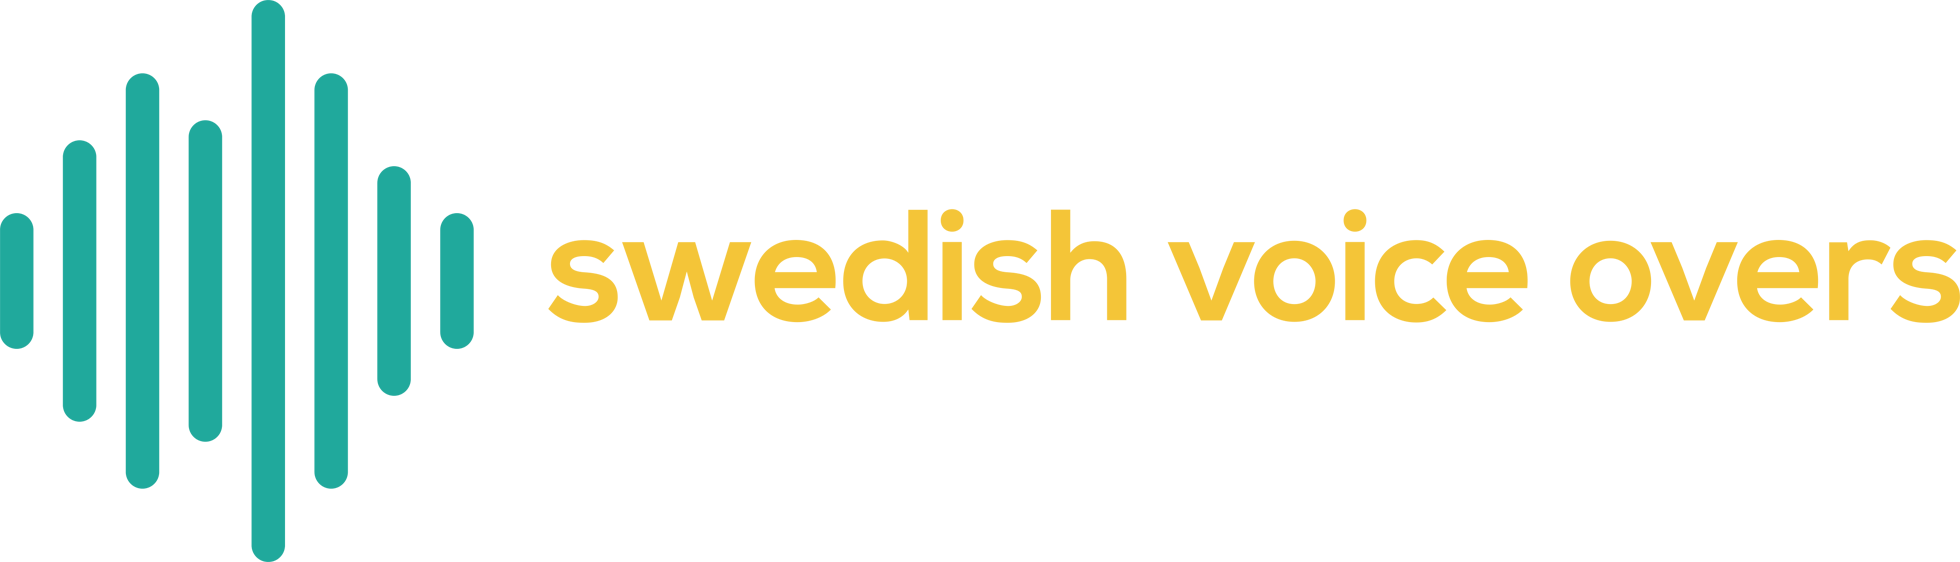 Swedish voiceovers